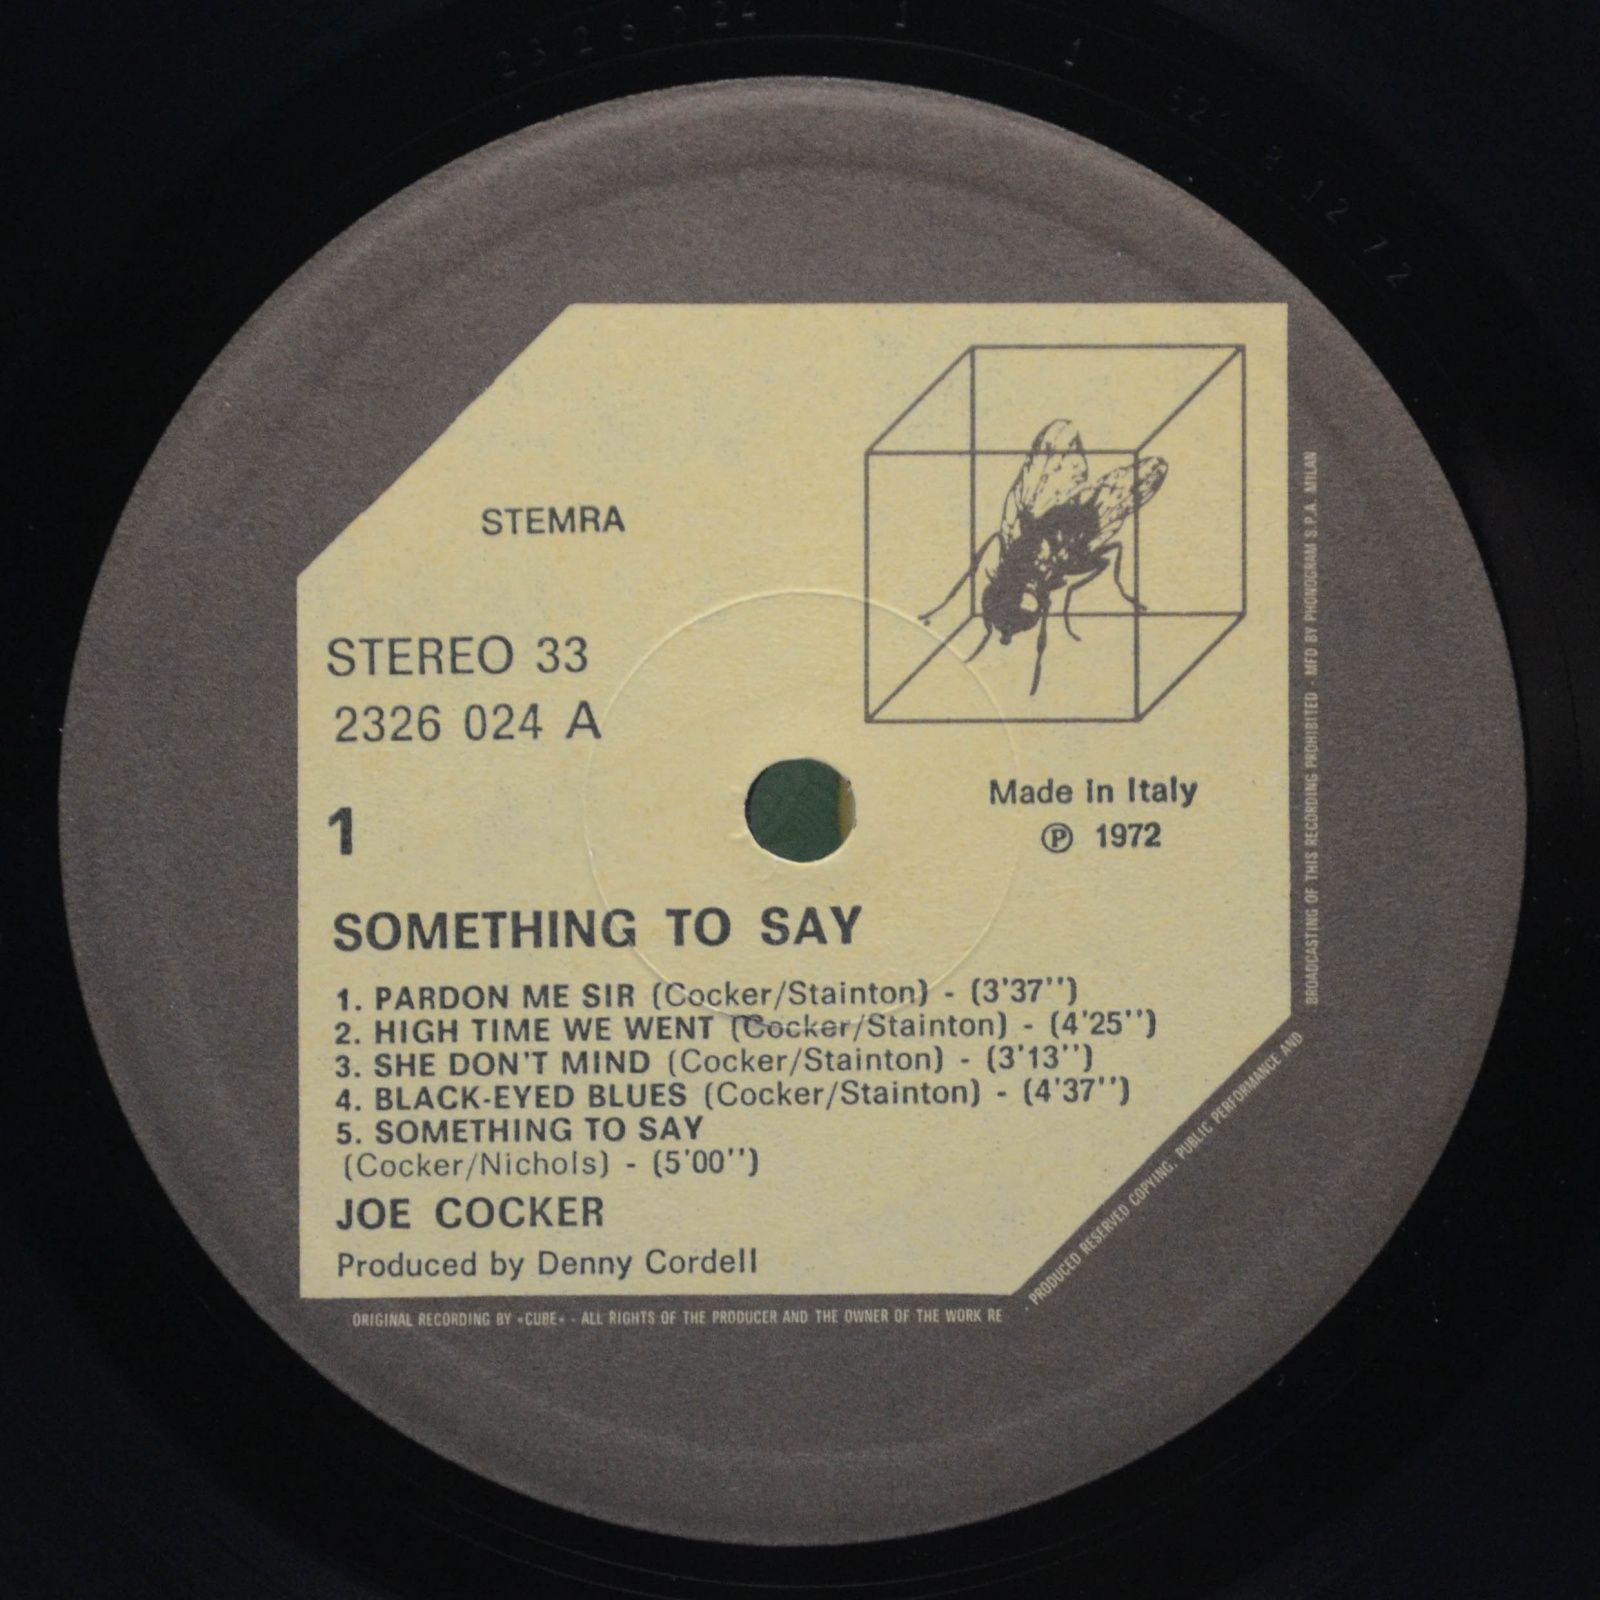 Joe Cocker — Something To Say, 1972